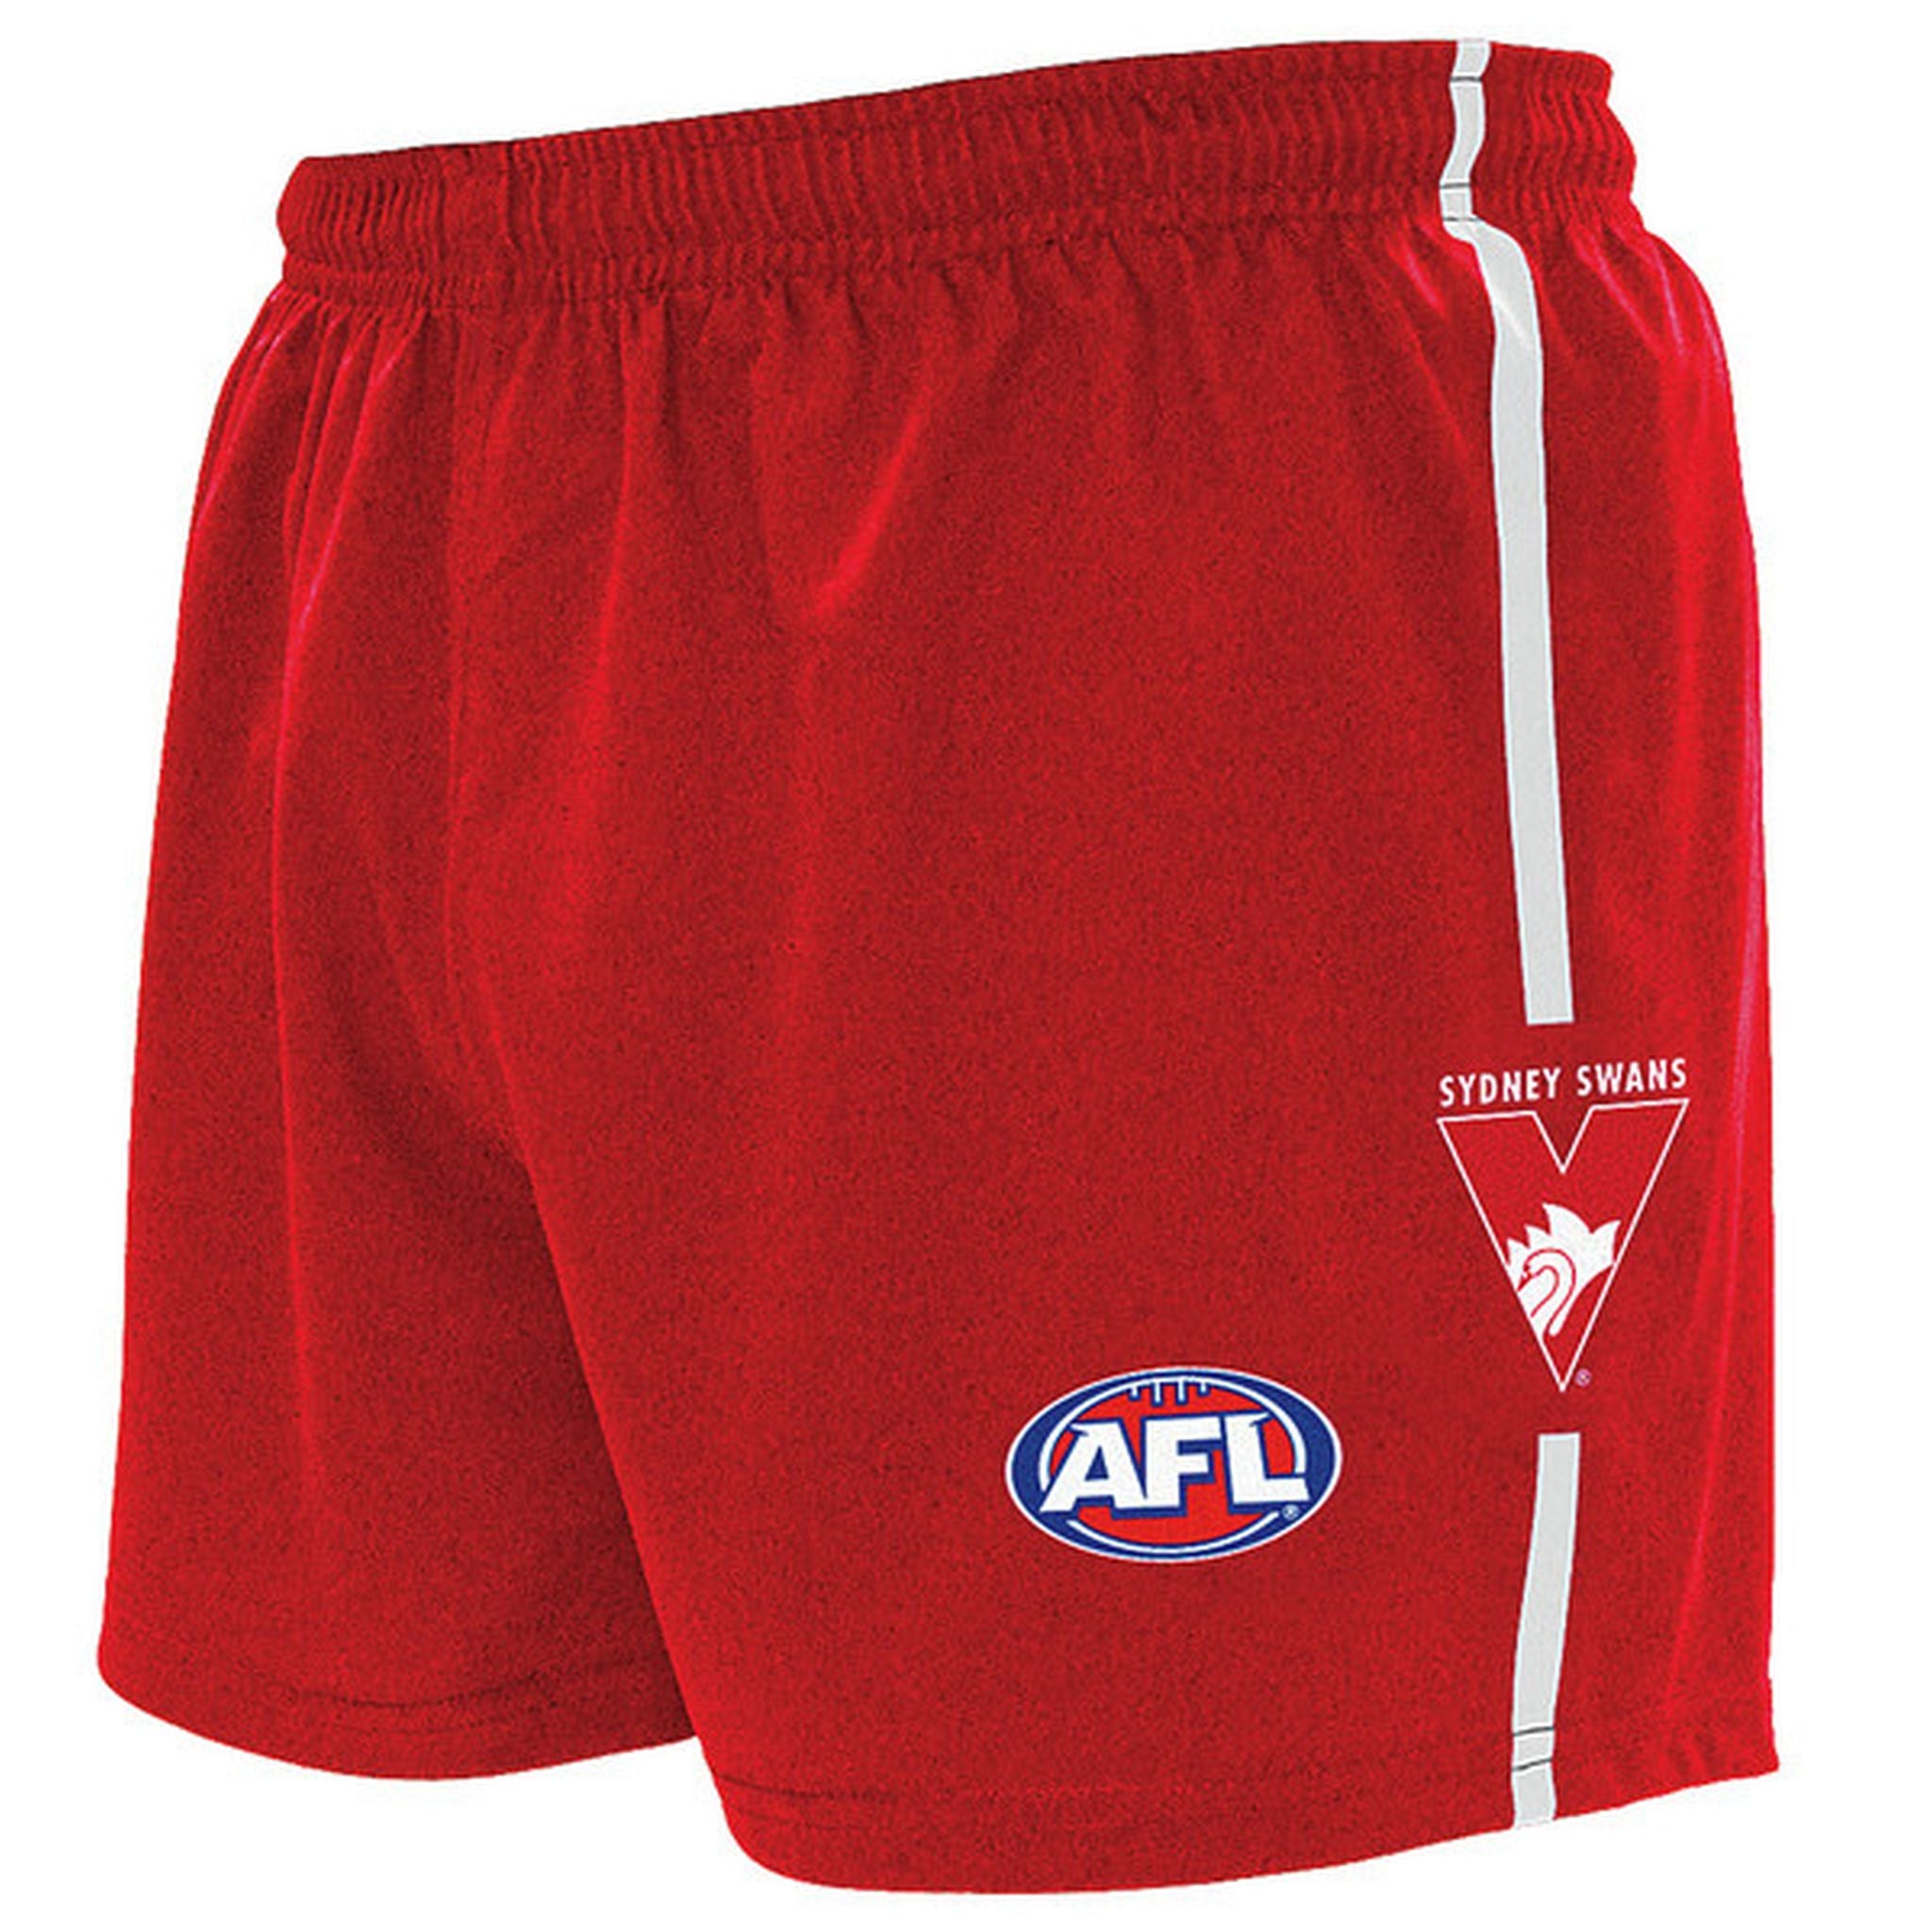 Burley Sydney Swans AFL Replica Adults Shorts